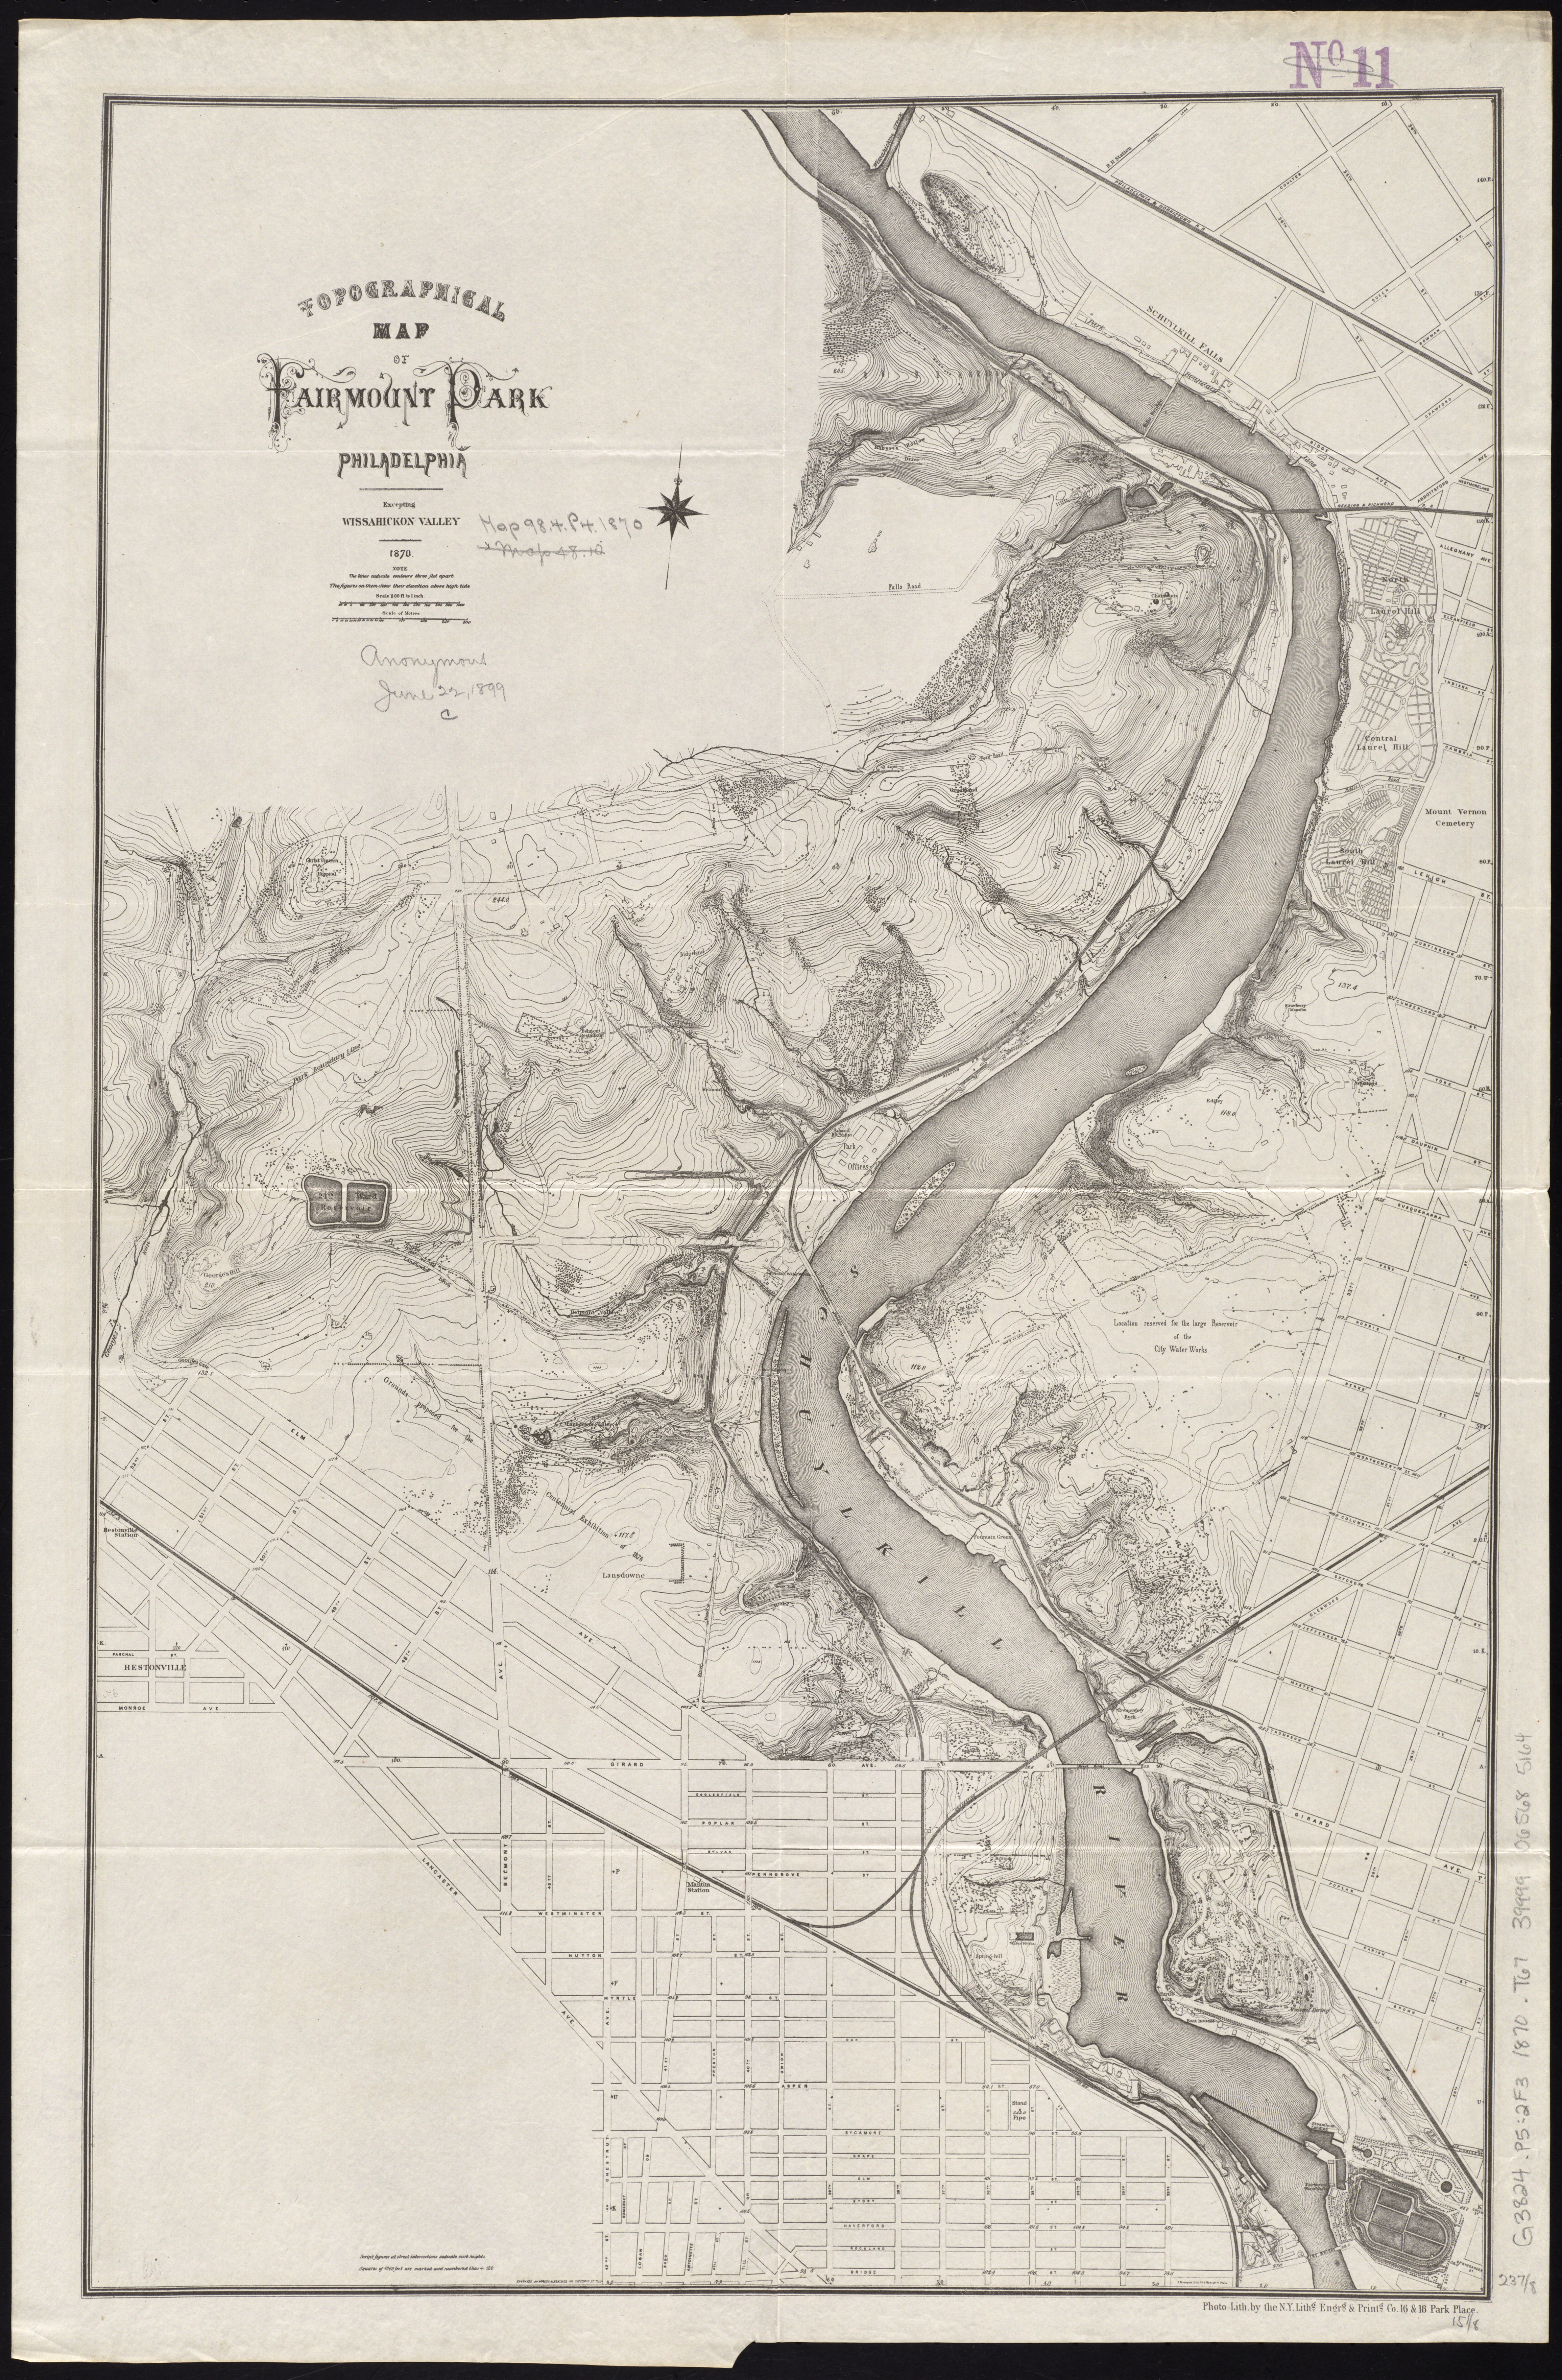 Topographical map of Fairmount Park, Philadelphia, 1870 | N.Y Lithg. Engrg. and Printg. Co., Boston Public Library